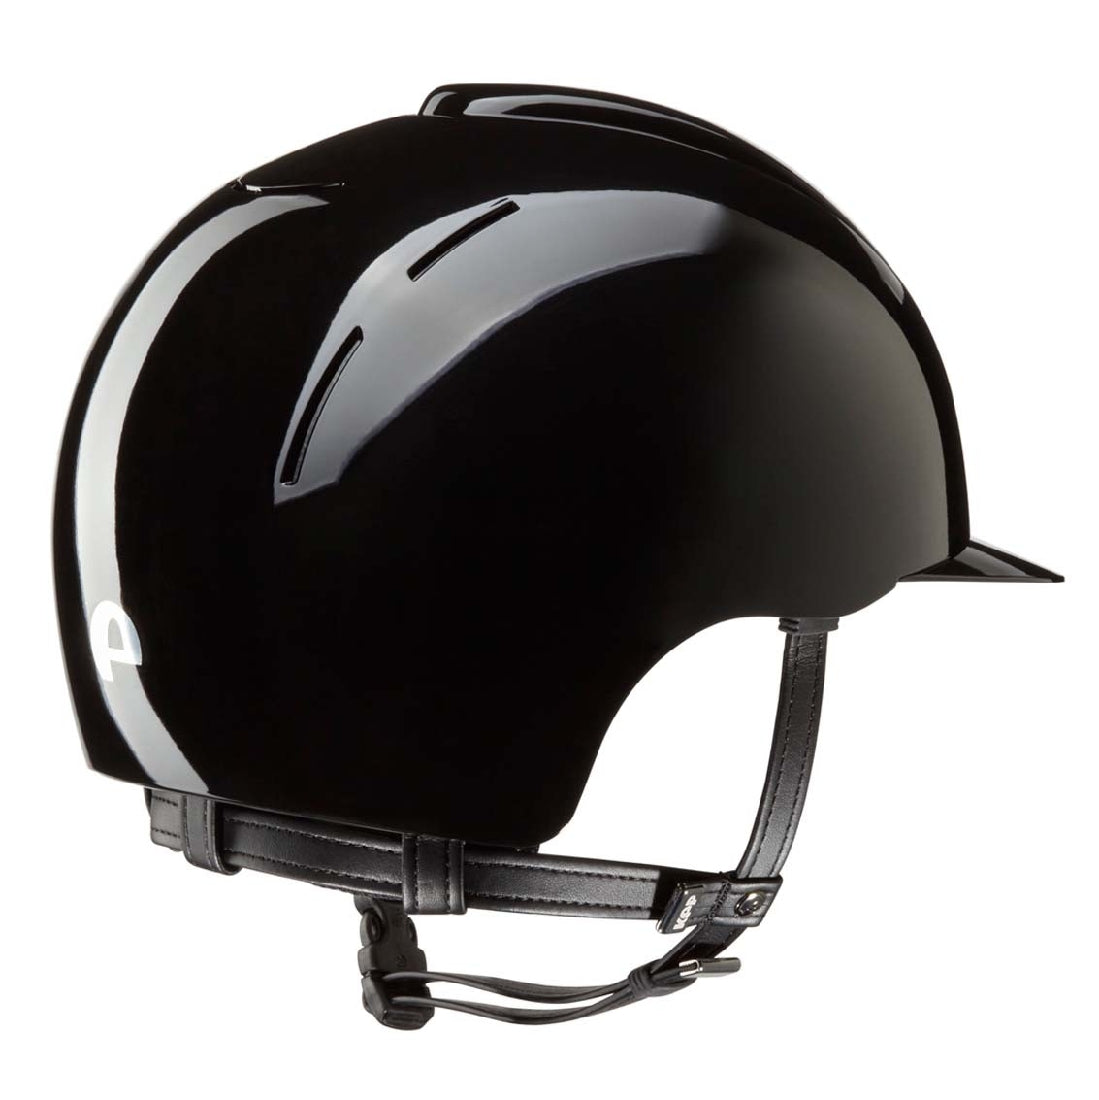 KEP brand black equestrian helmet, modern style with ventilation channels.